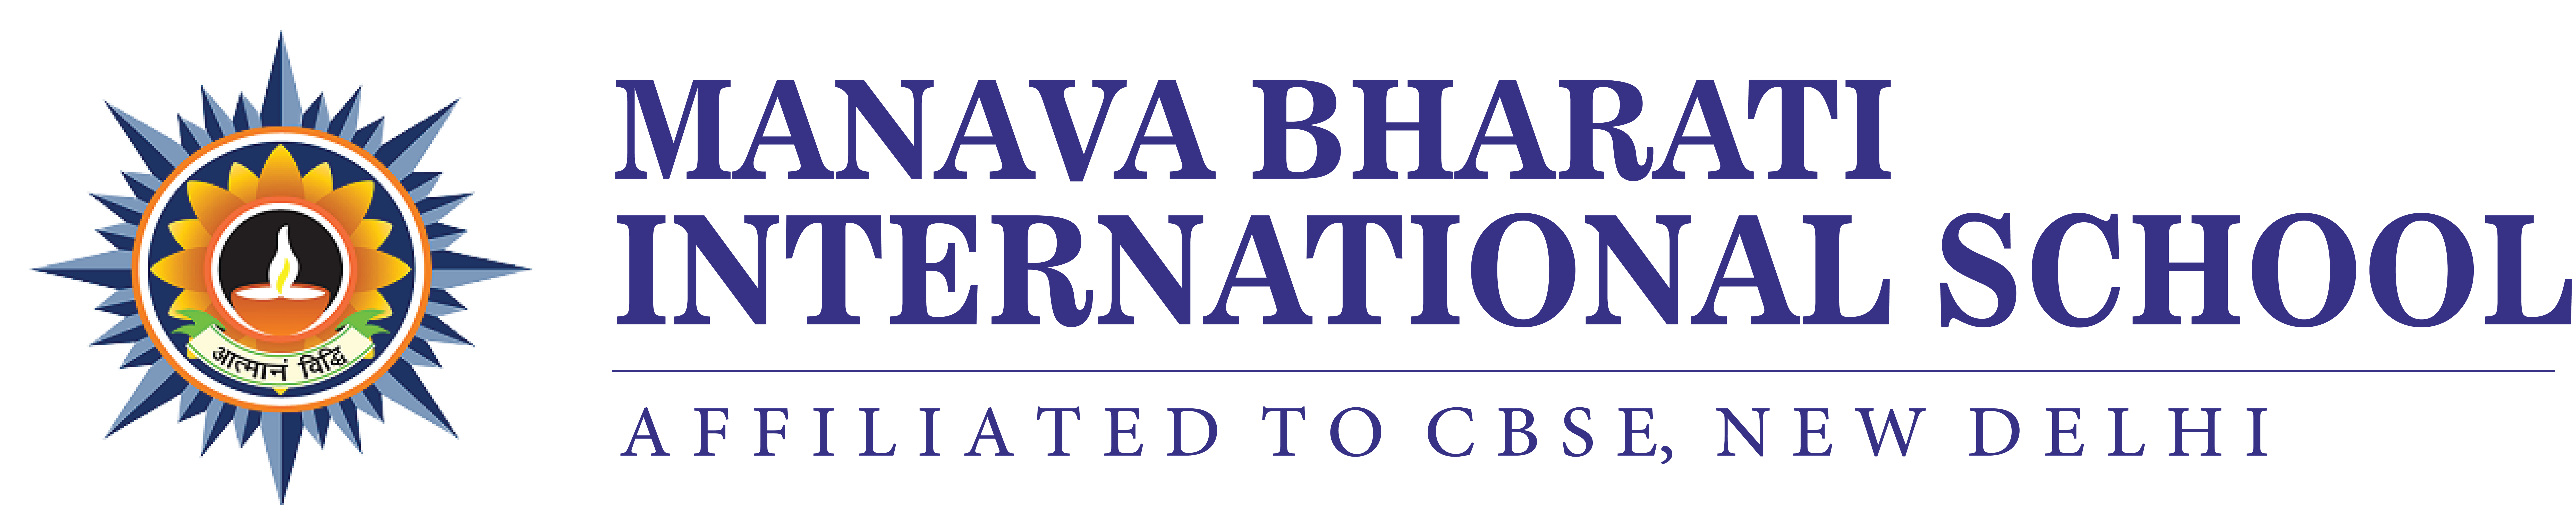 Manava Bharati International School logo